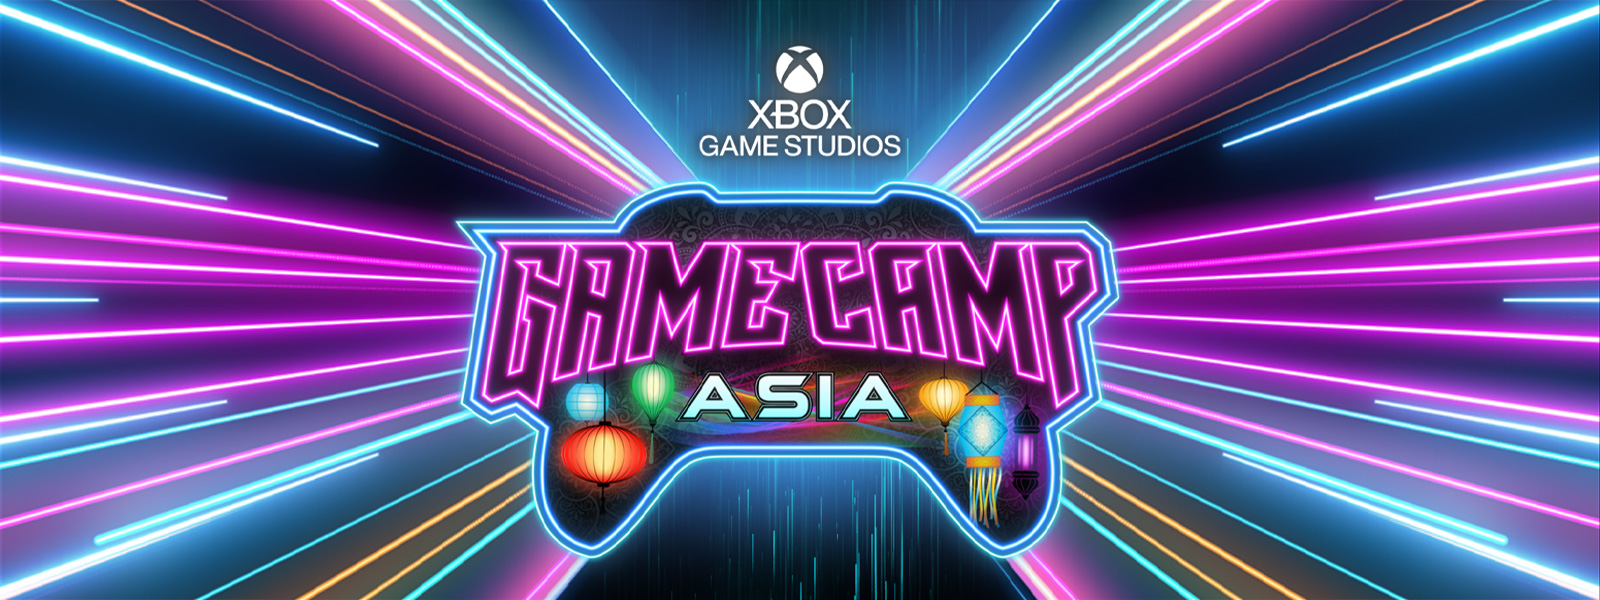 Xbox Game Studios Game Camp Asia logo.